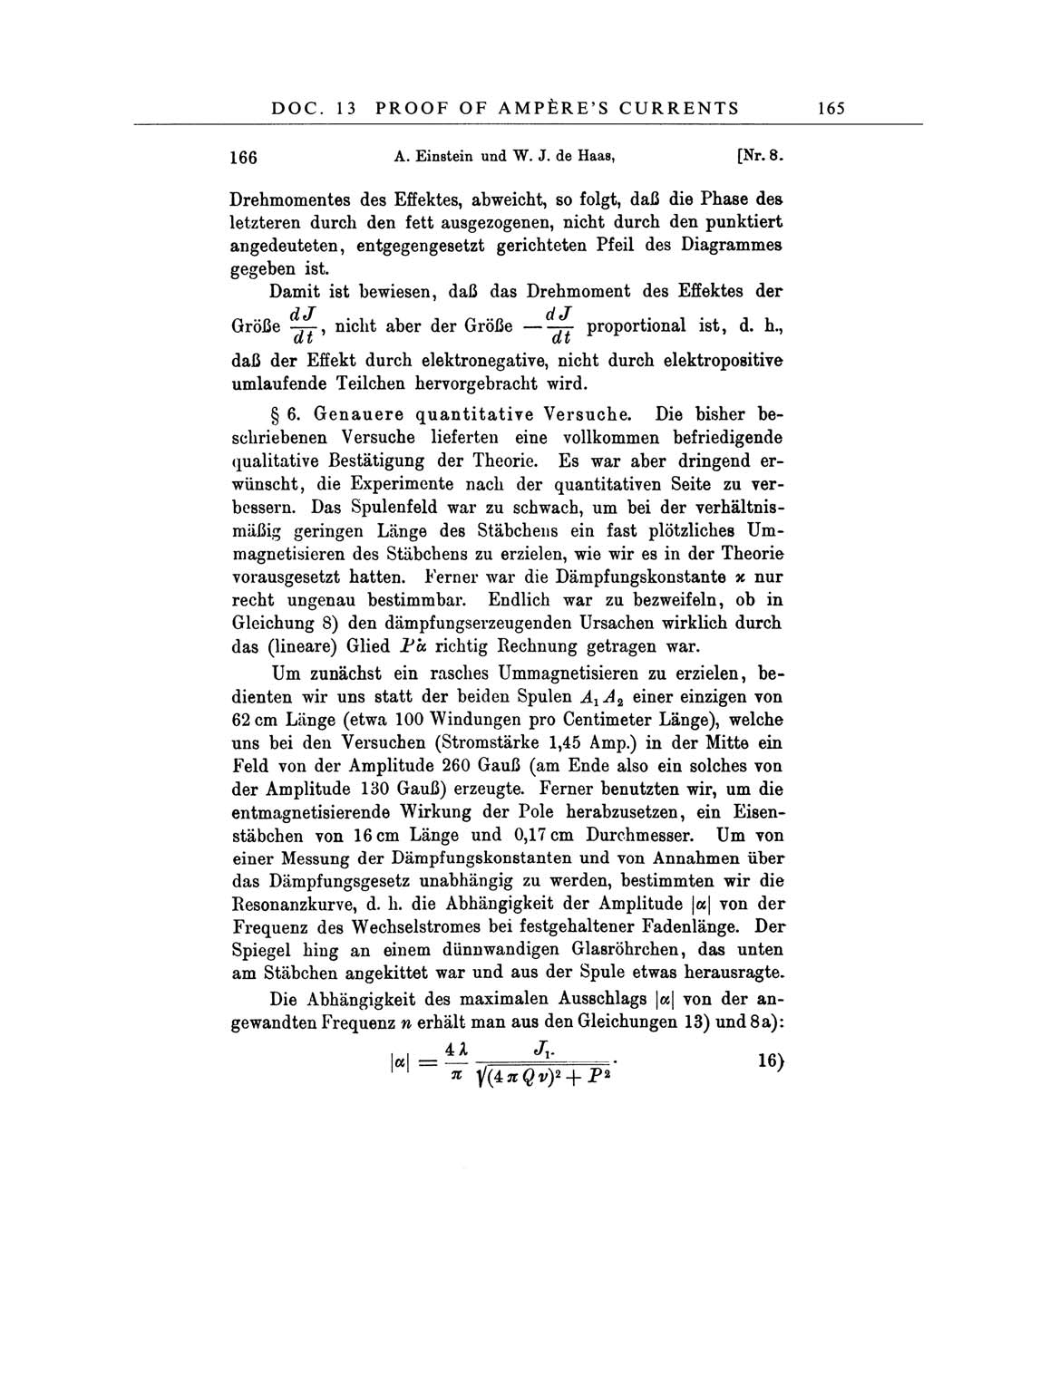 Volume 6: The Berlin Years: Writings, 1914-1917 page 165